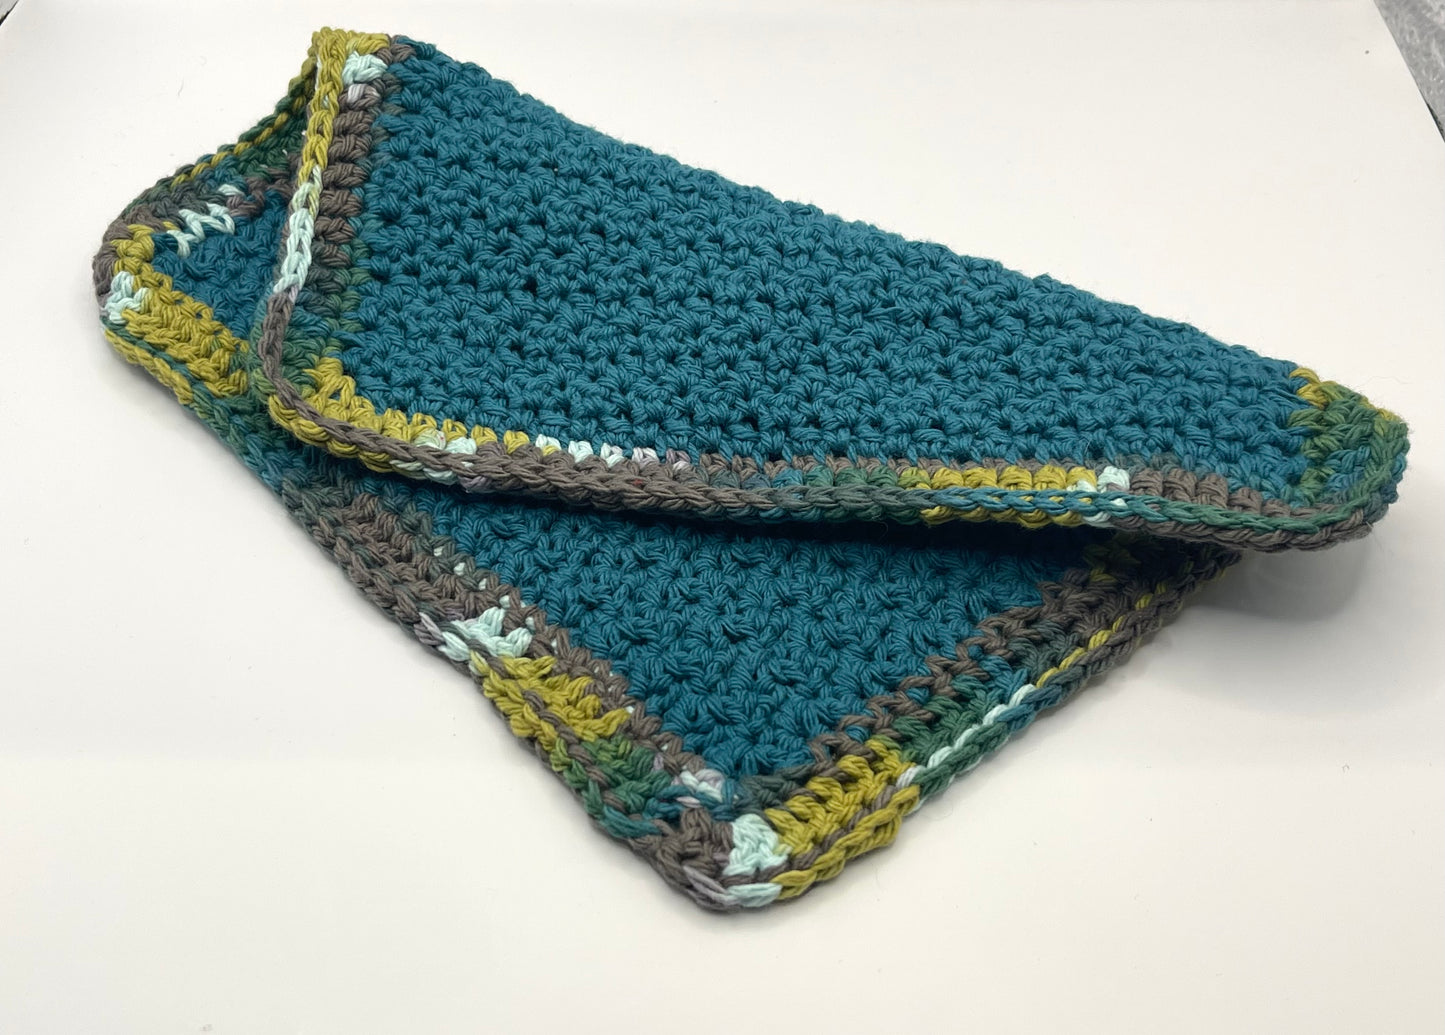 Knots & Crafts by Mikayla Crochet WashCloth